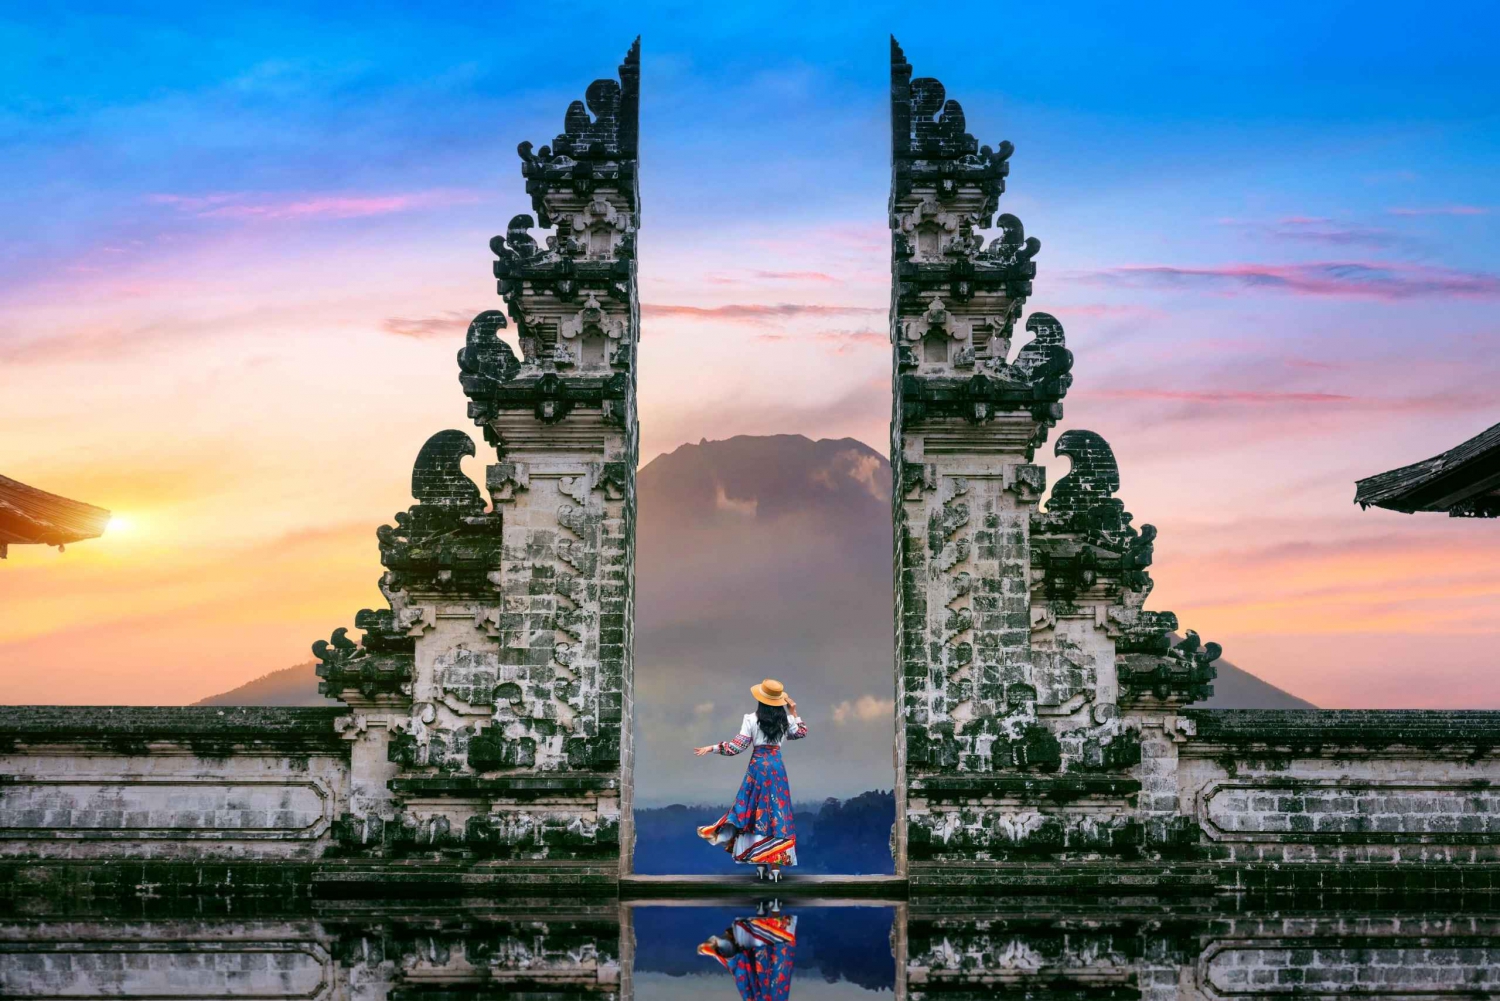 Fra Bali : Lempuyang-tempelet, Tirta gangga, taman ujung